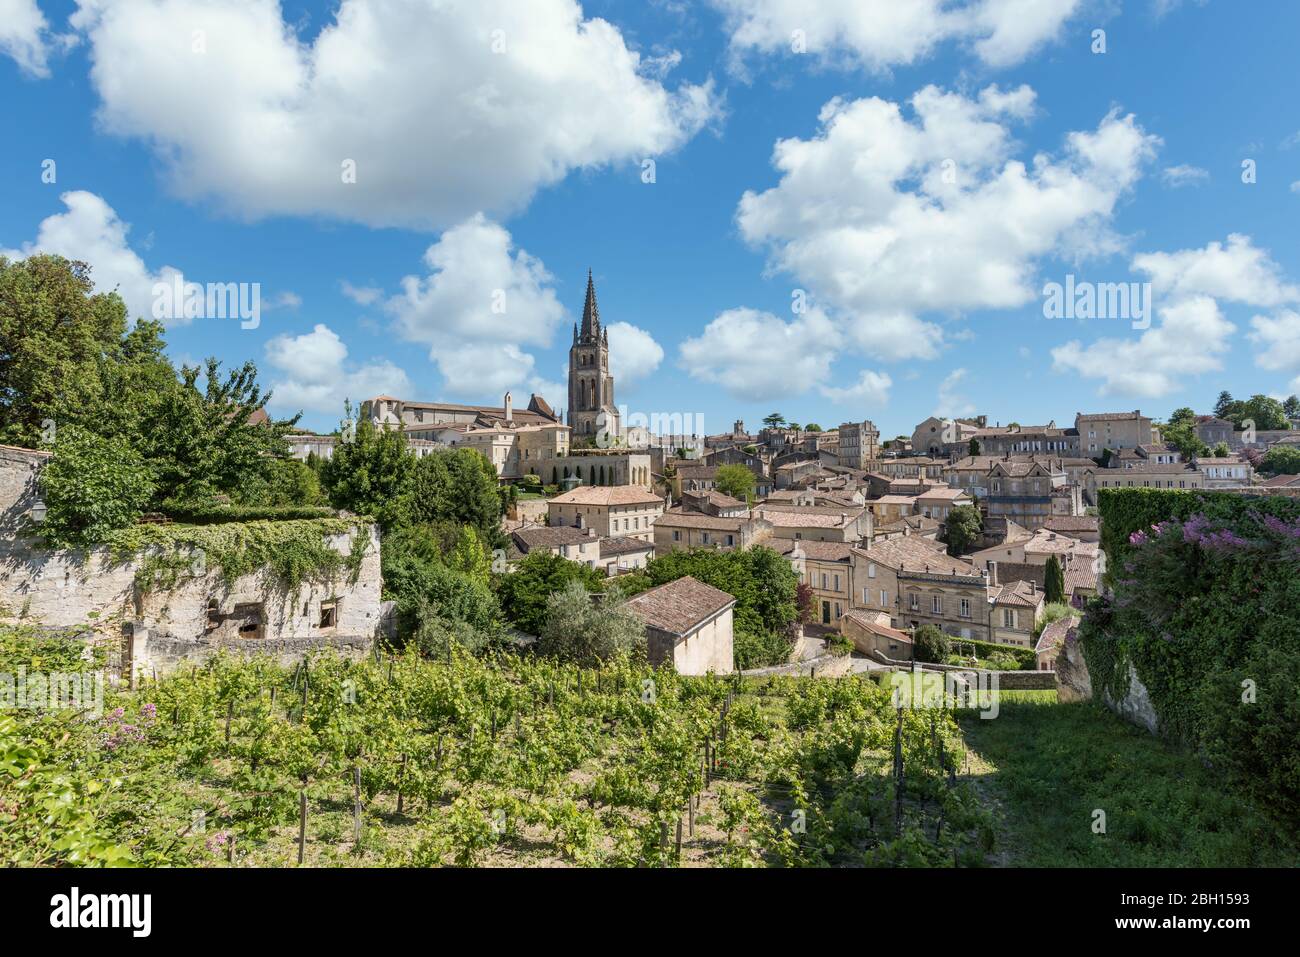 The village of Saint-Emilion, near Bordeaux in France Stock Photo